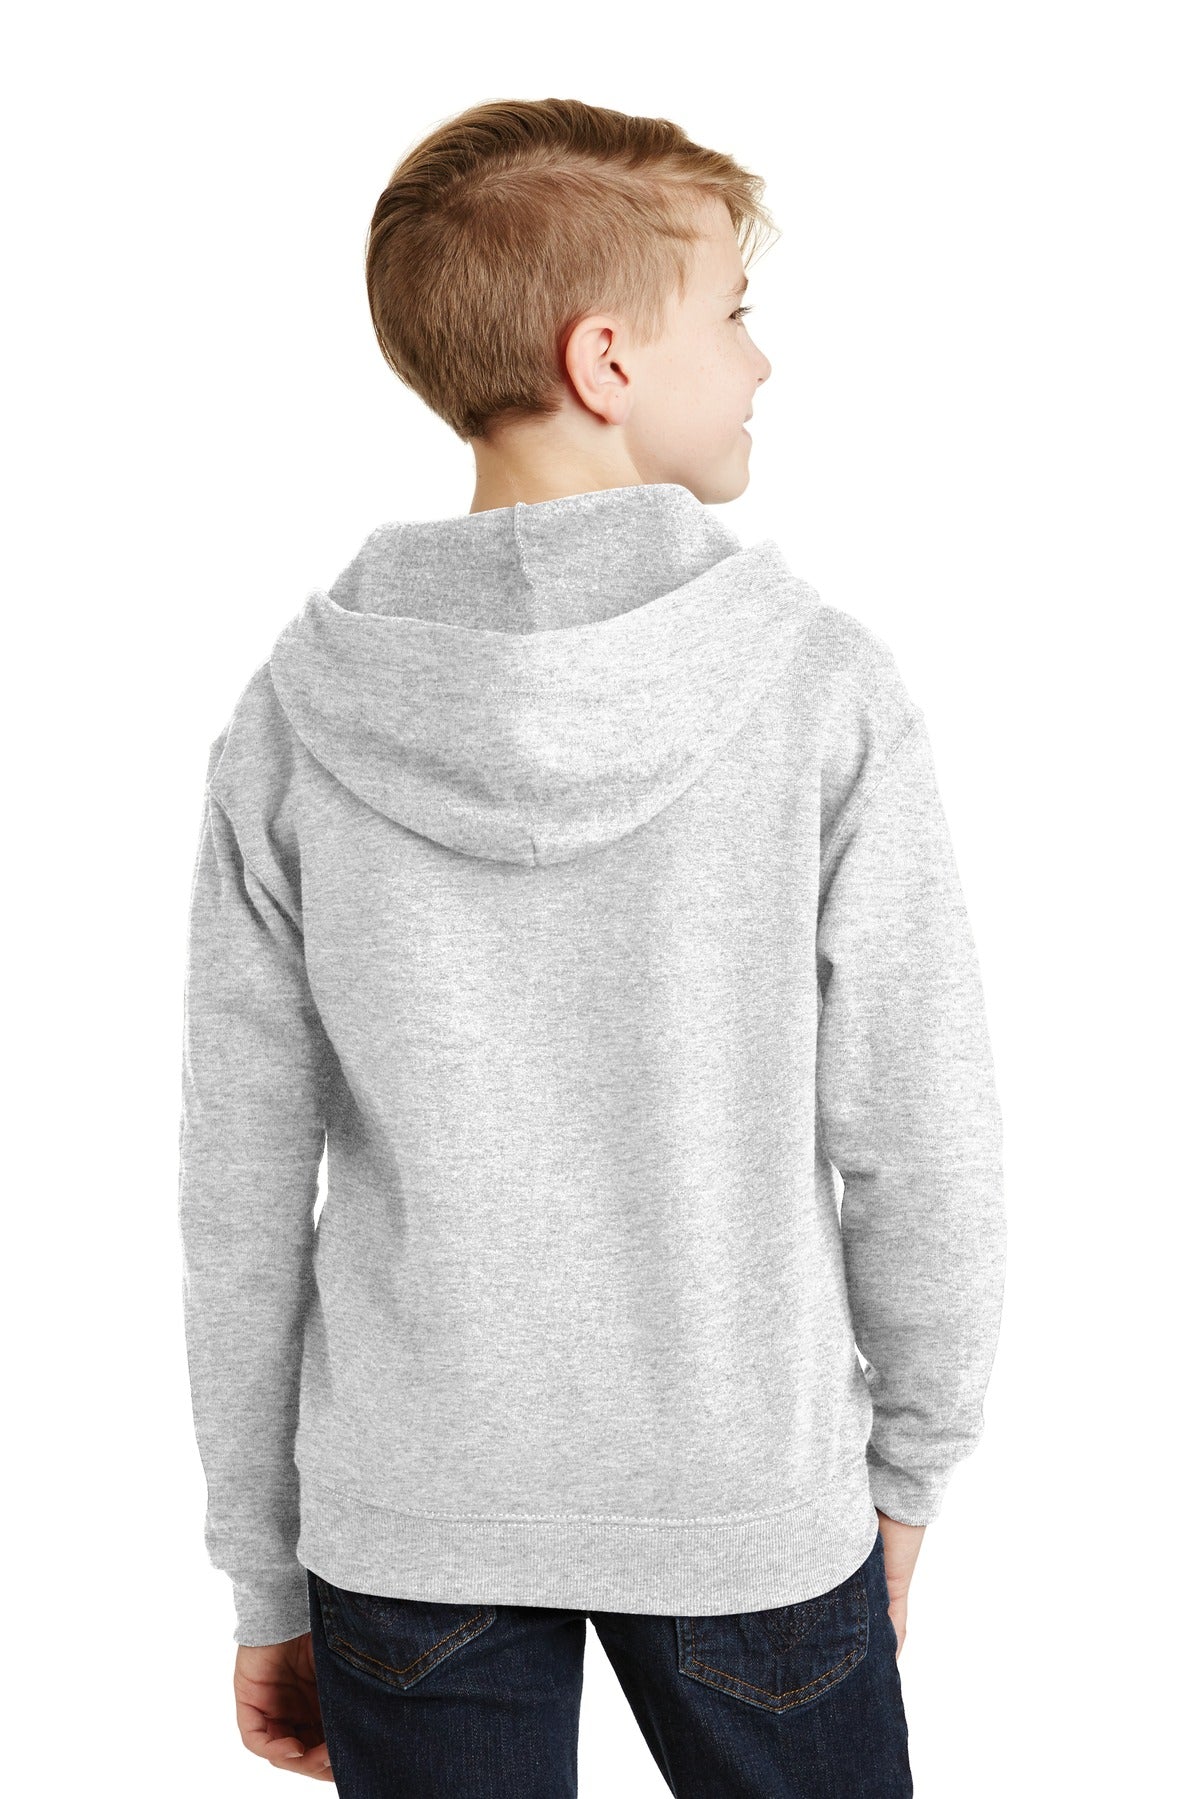 JERZEES® - Youth NuBlend® Full-Zip Hooded Sweatshirt. 993B - DFW Impression